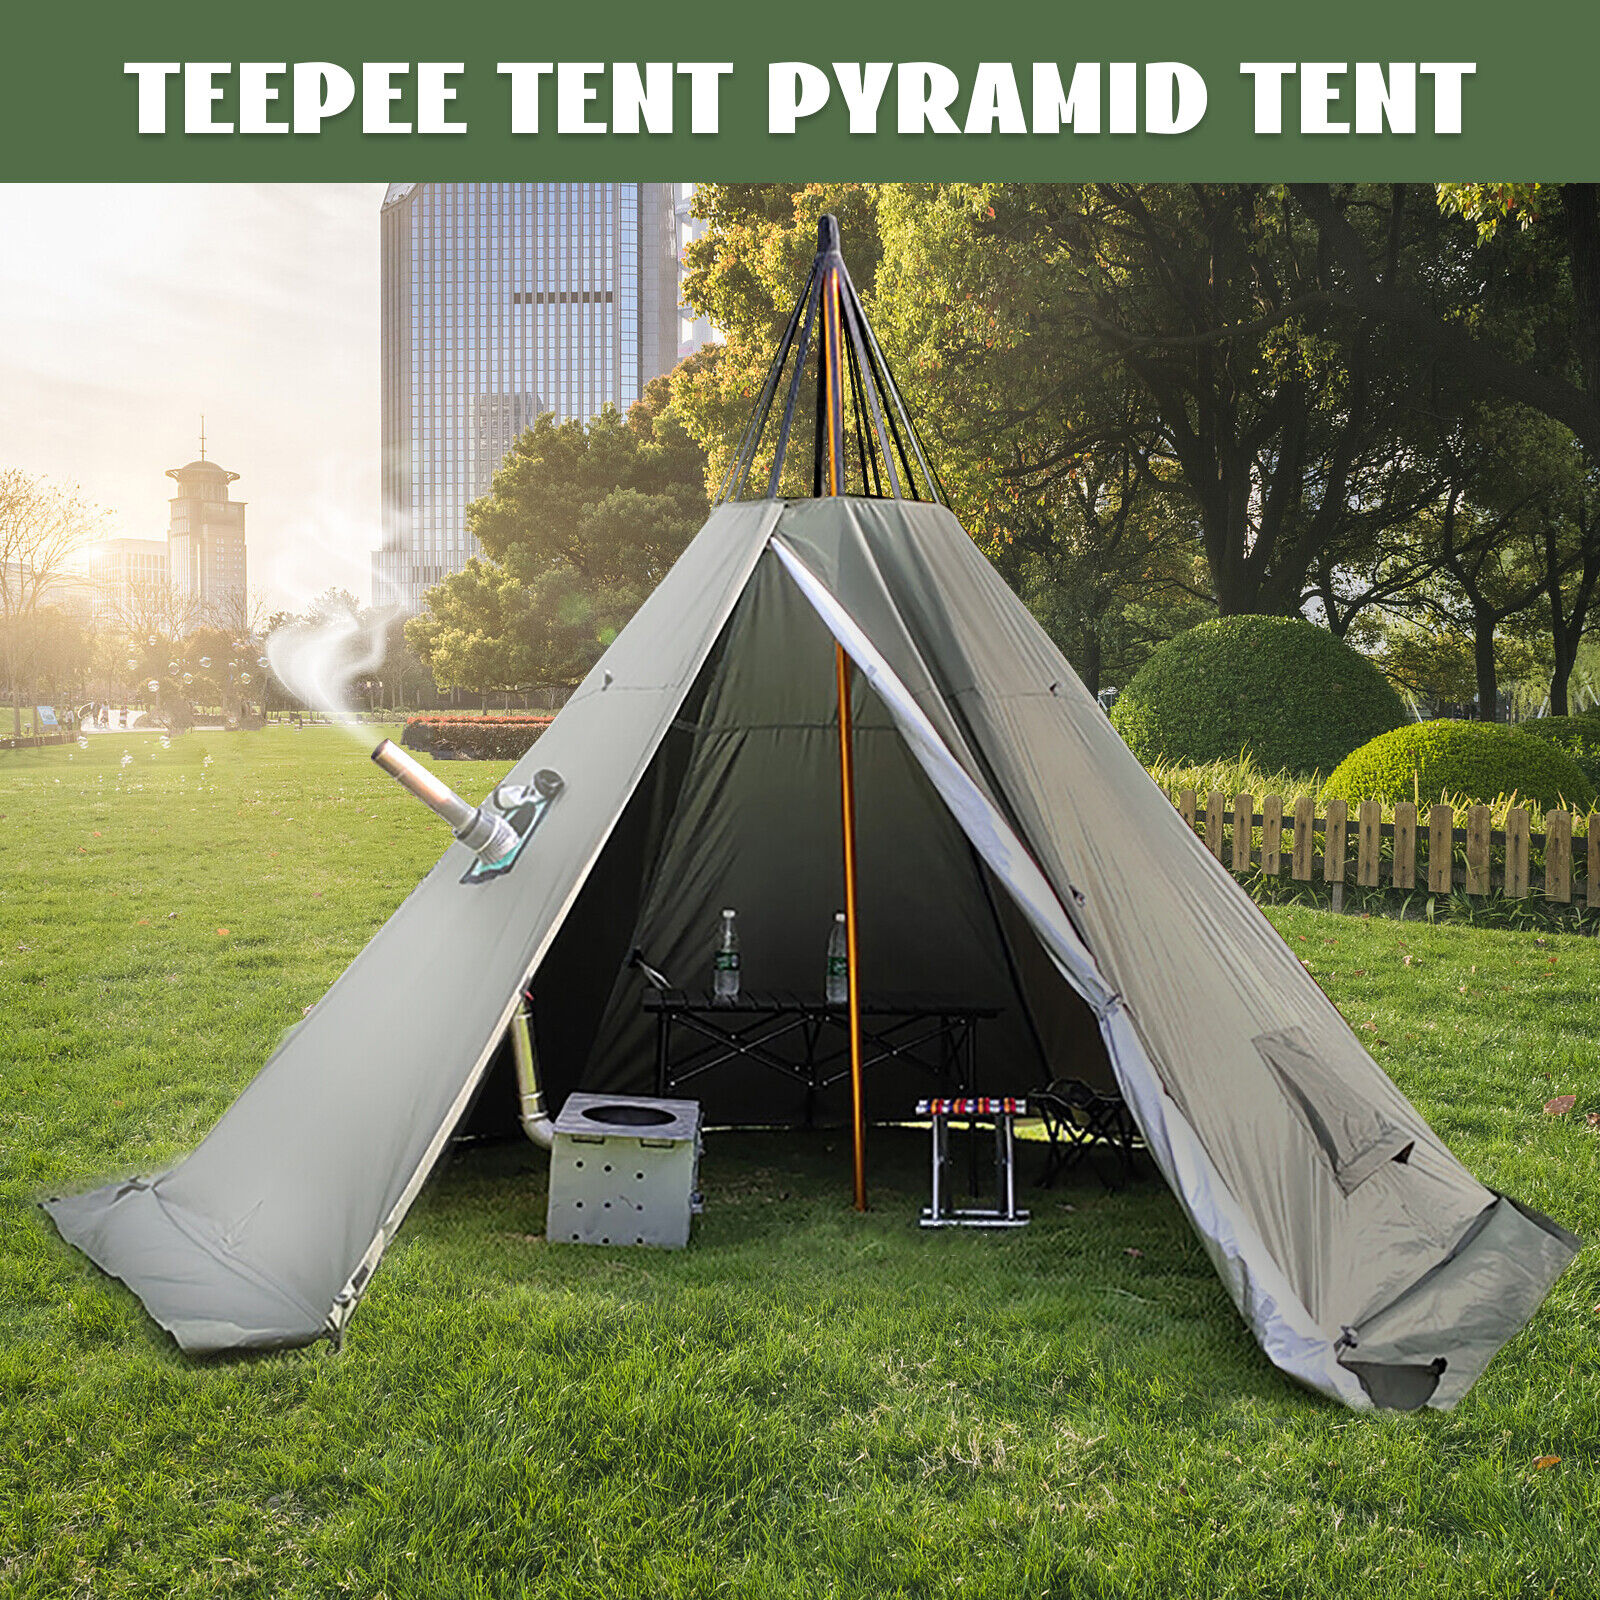 Teepee Tent Pyramid Tent Hike Waterproof 2 Doors Tent 4 Season Outdoor Camping